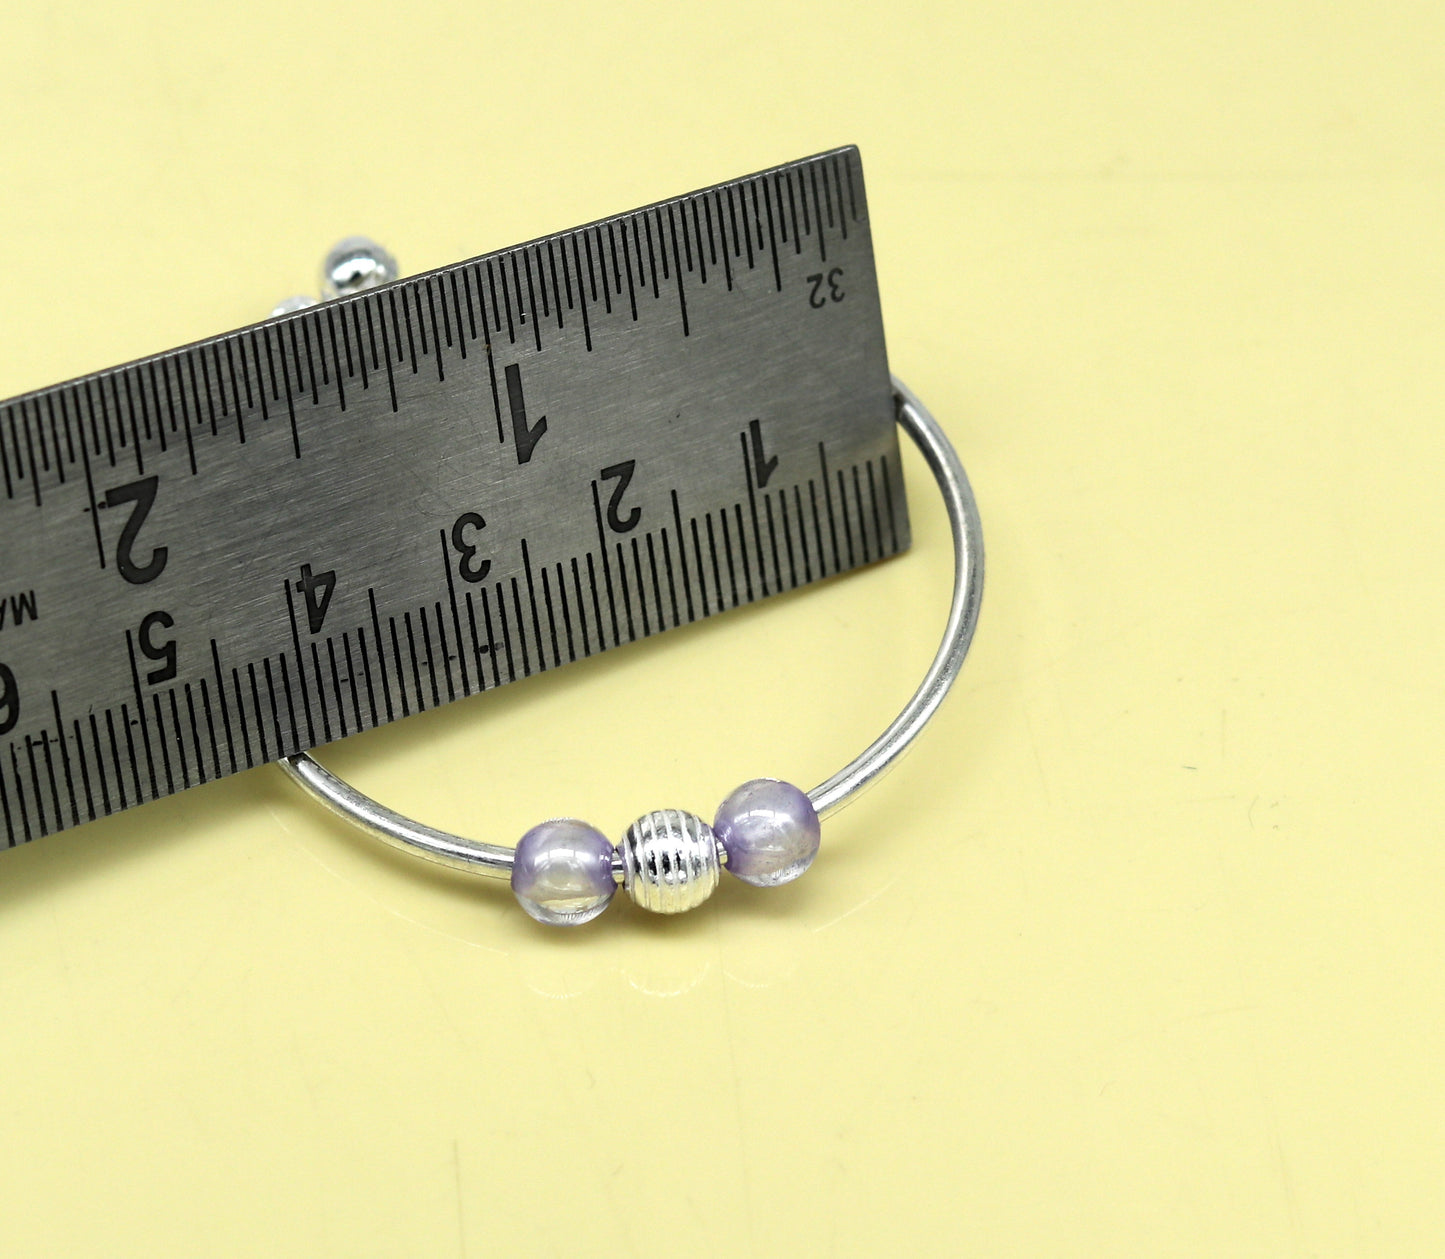 solid silver handmade fabulous plain design adjustable baby bangle bracelet kada, excellent customized charm bracelet for uisex kids nbbk119 - TRIBAL ORNAMENTS